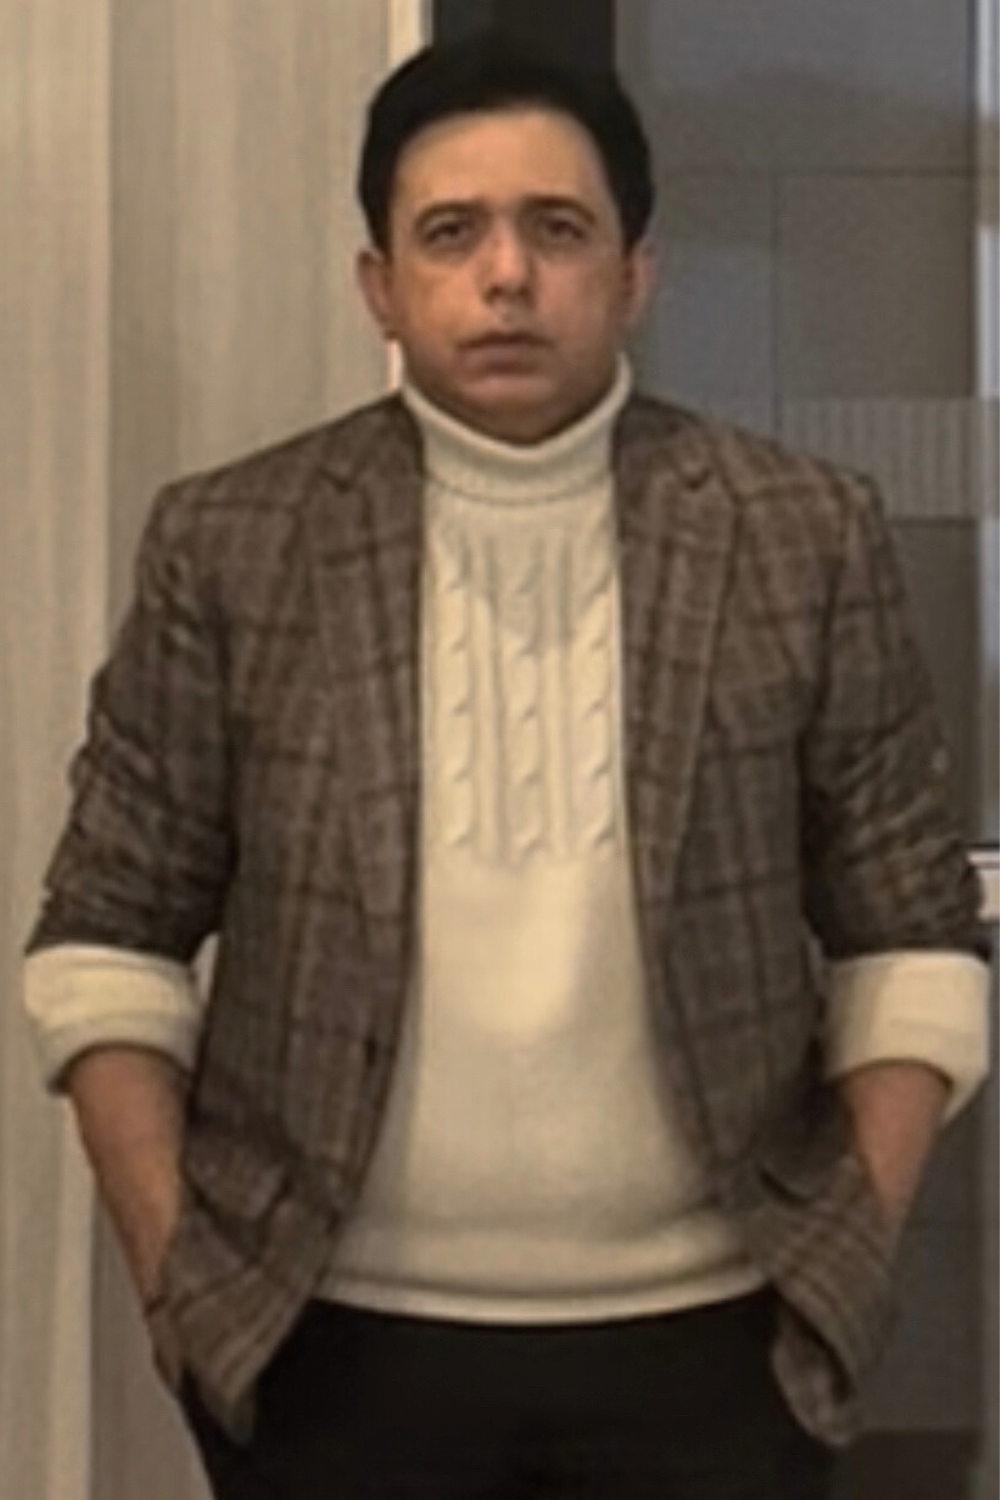 Chaitanya Pathak chief technology officer